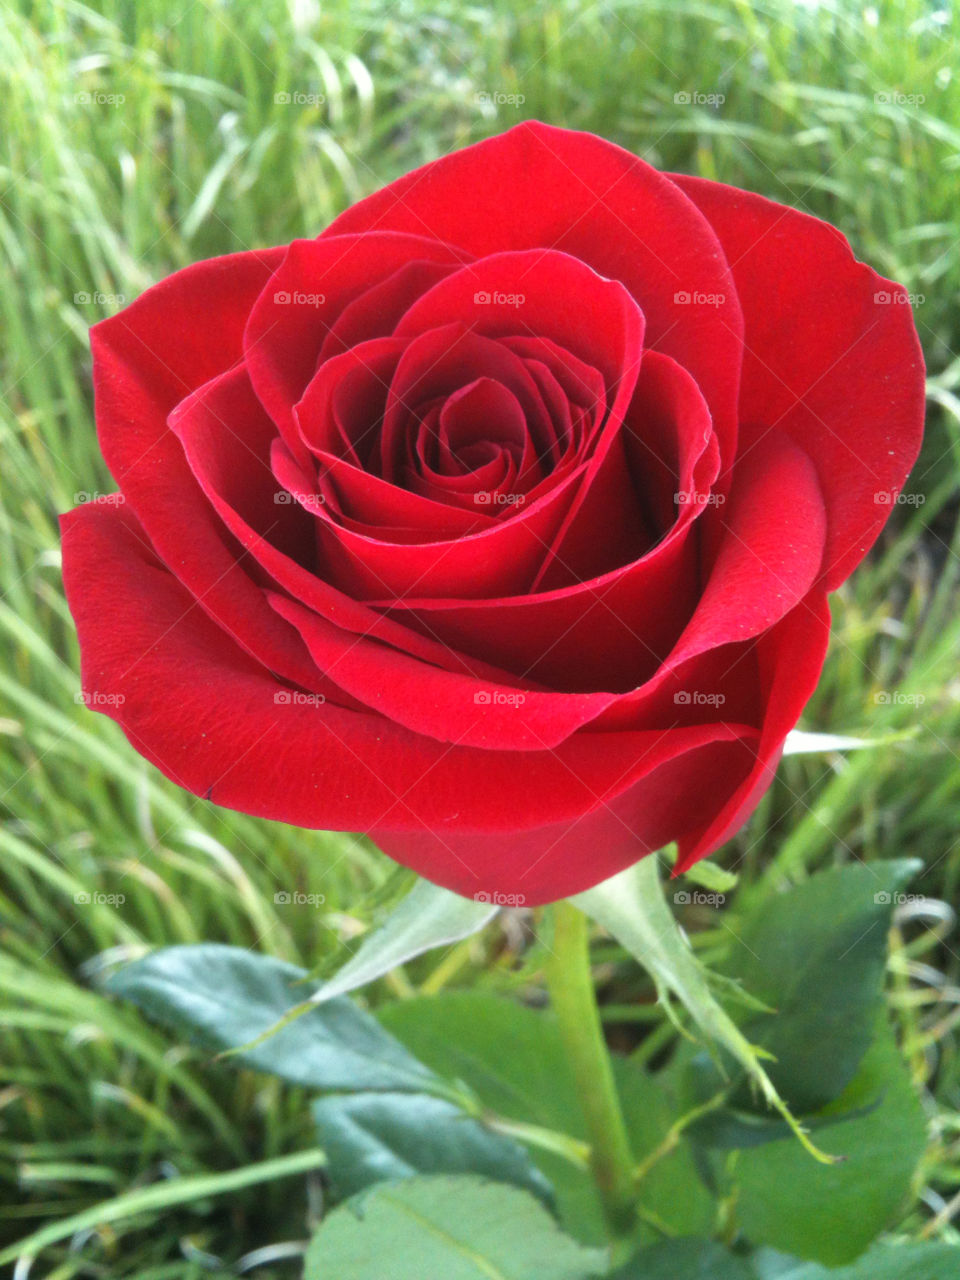 garden flower red rose by dawax